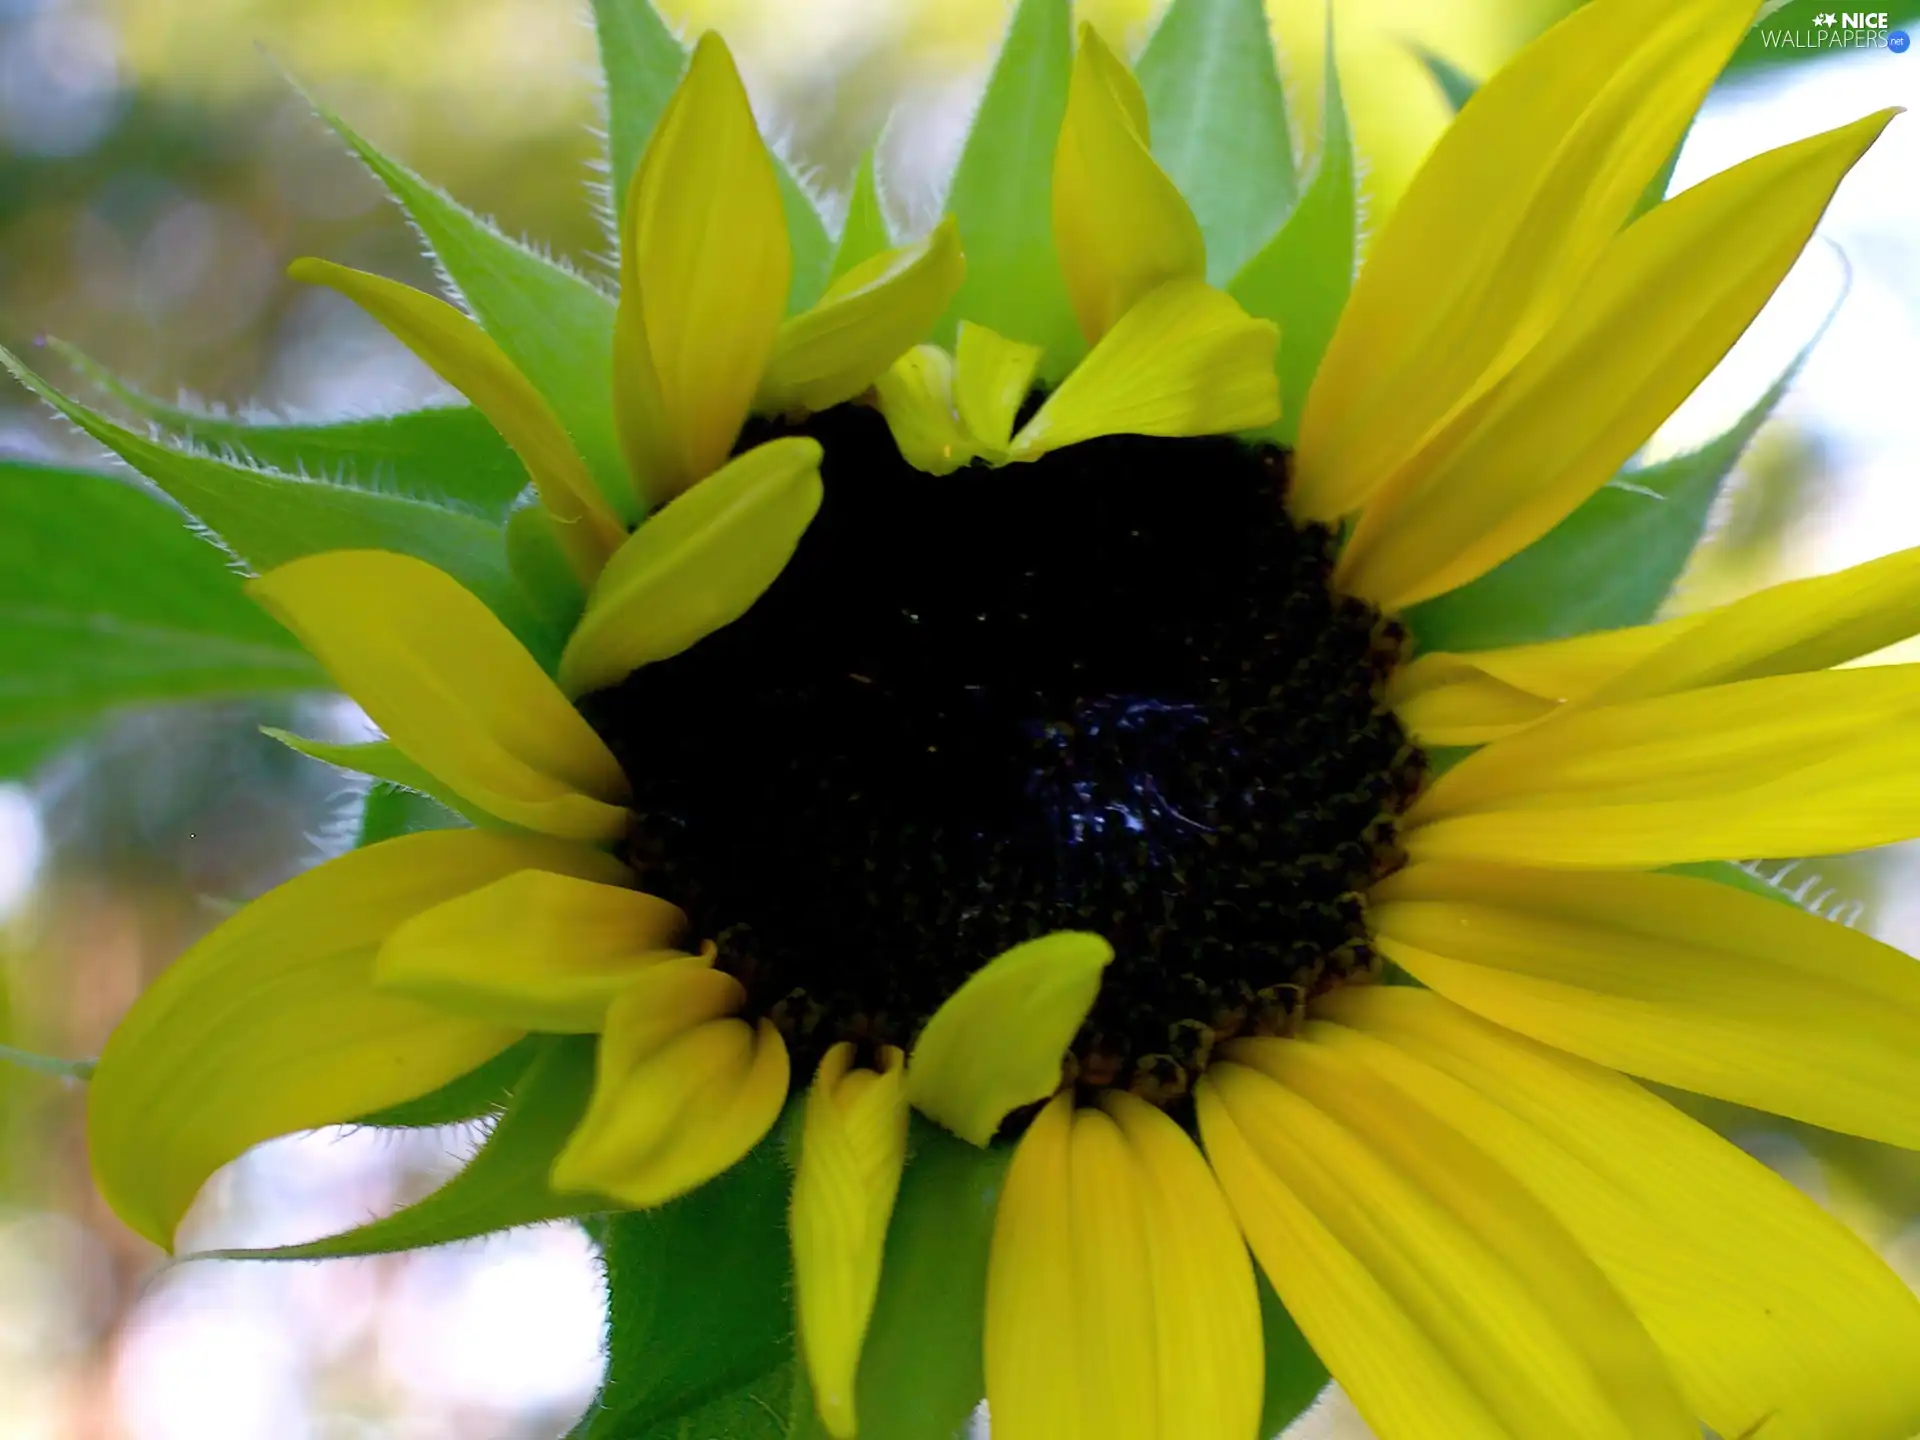 Sunflower, Leaf